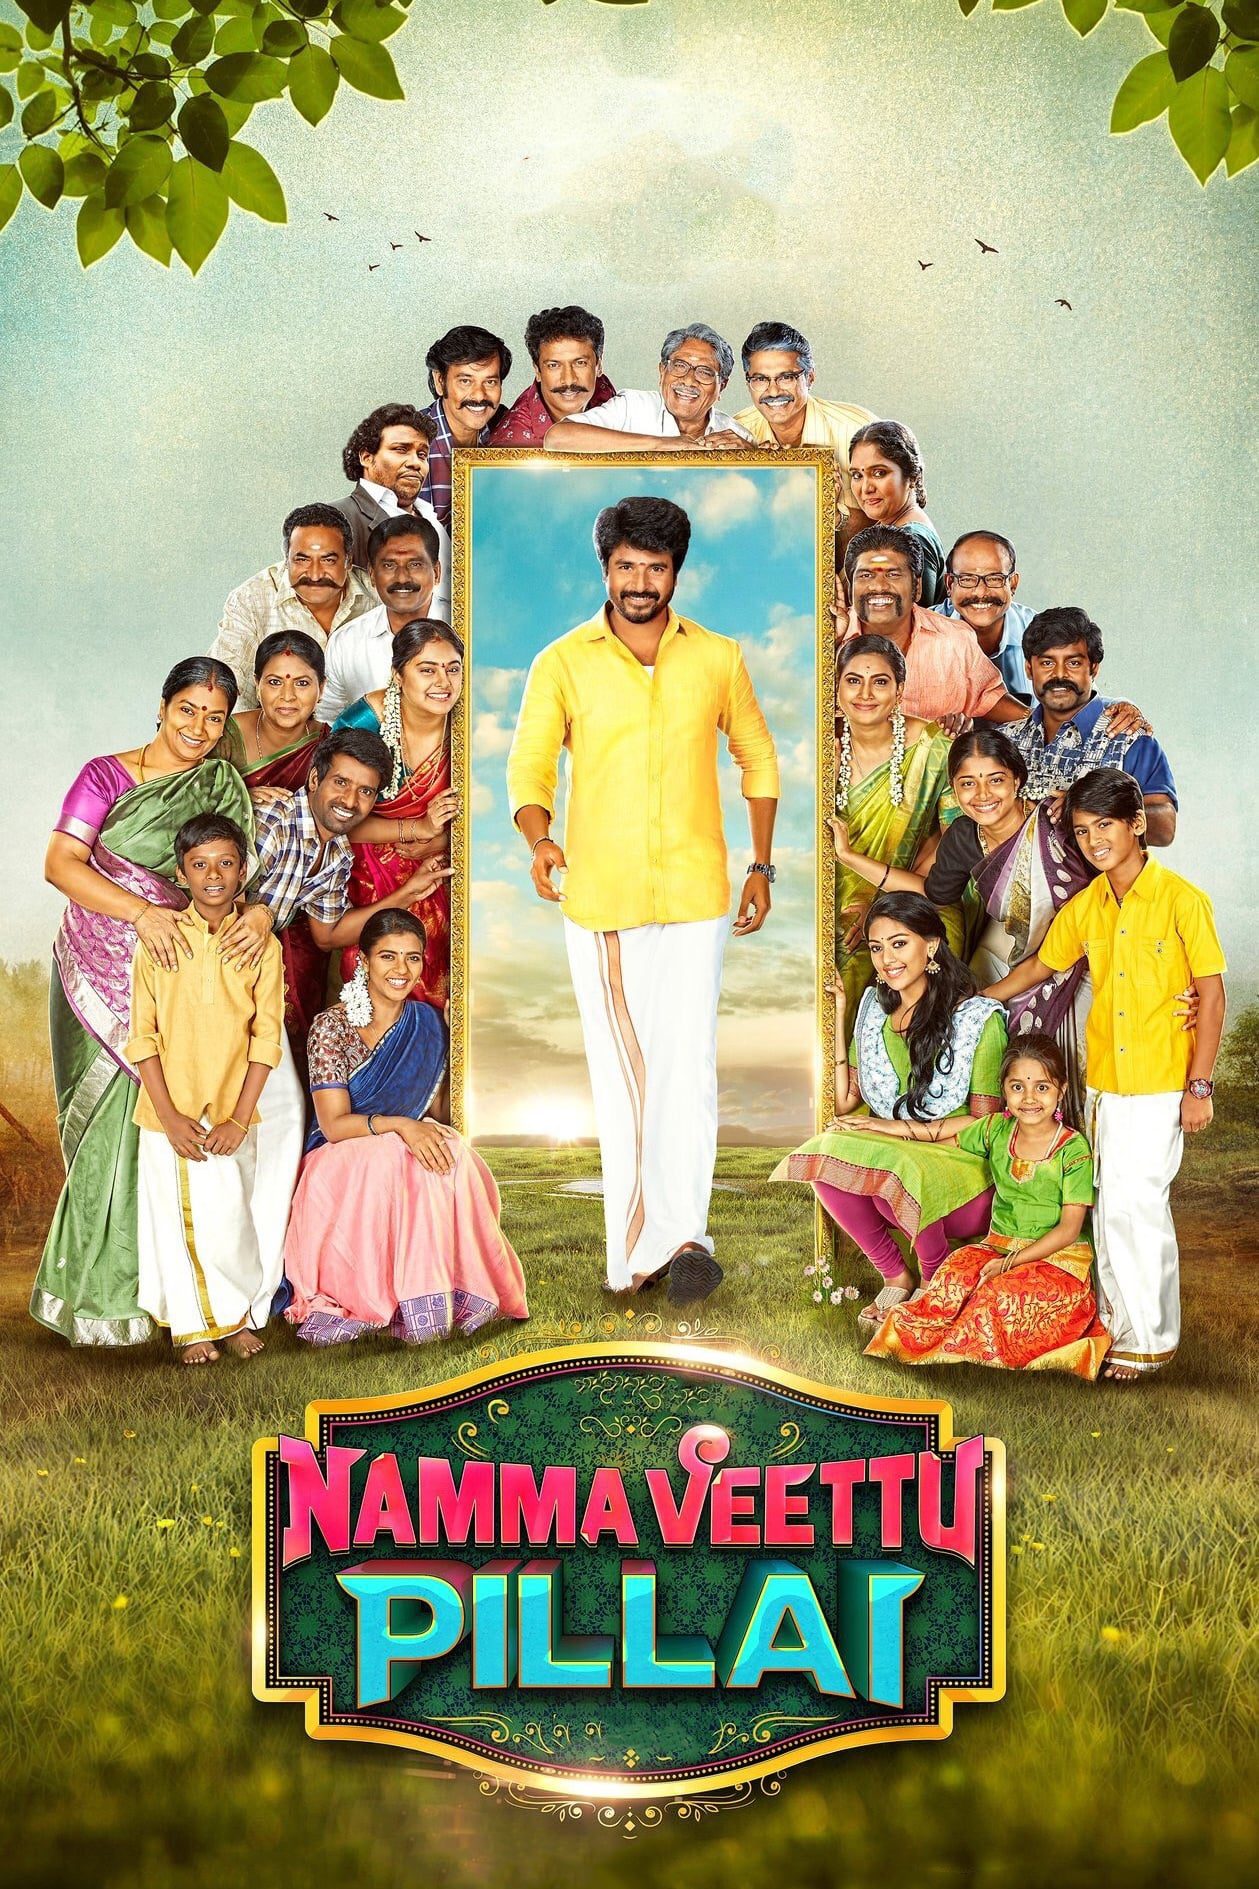 Poster for the movie "Namma Veettu Pillai"